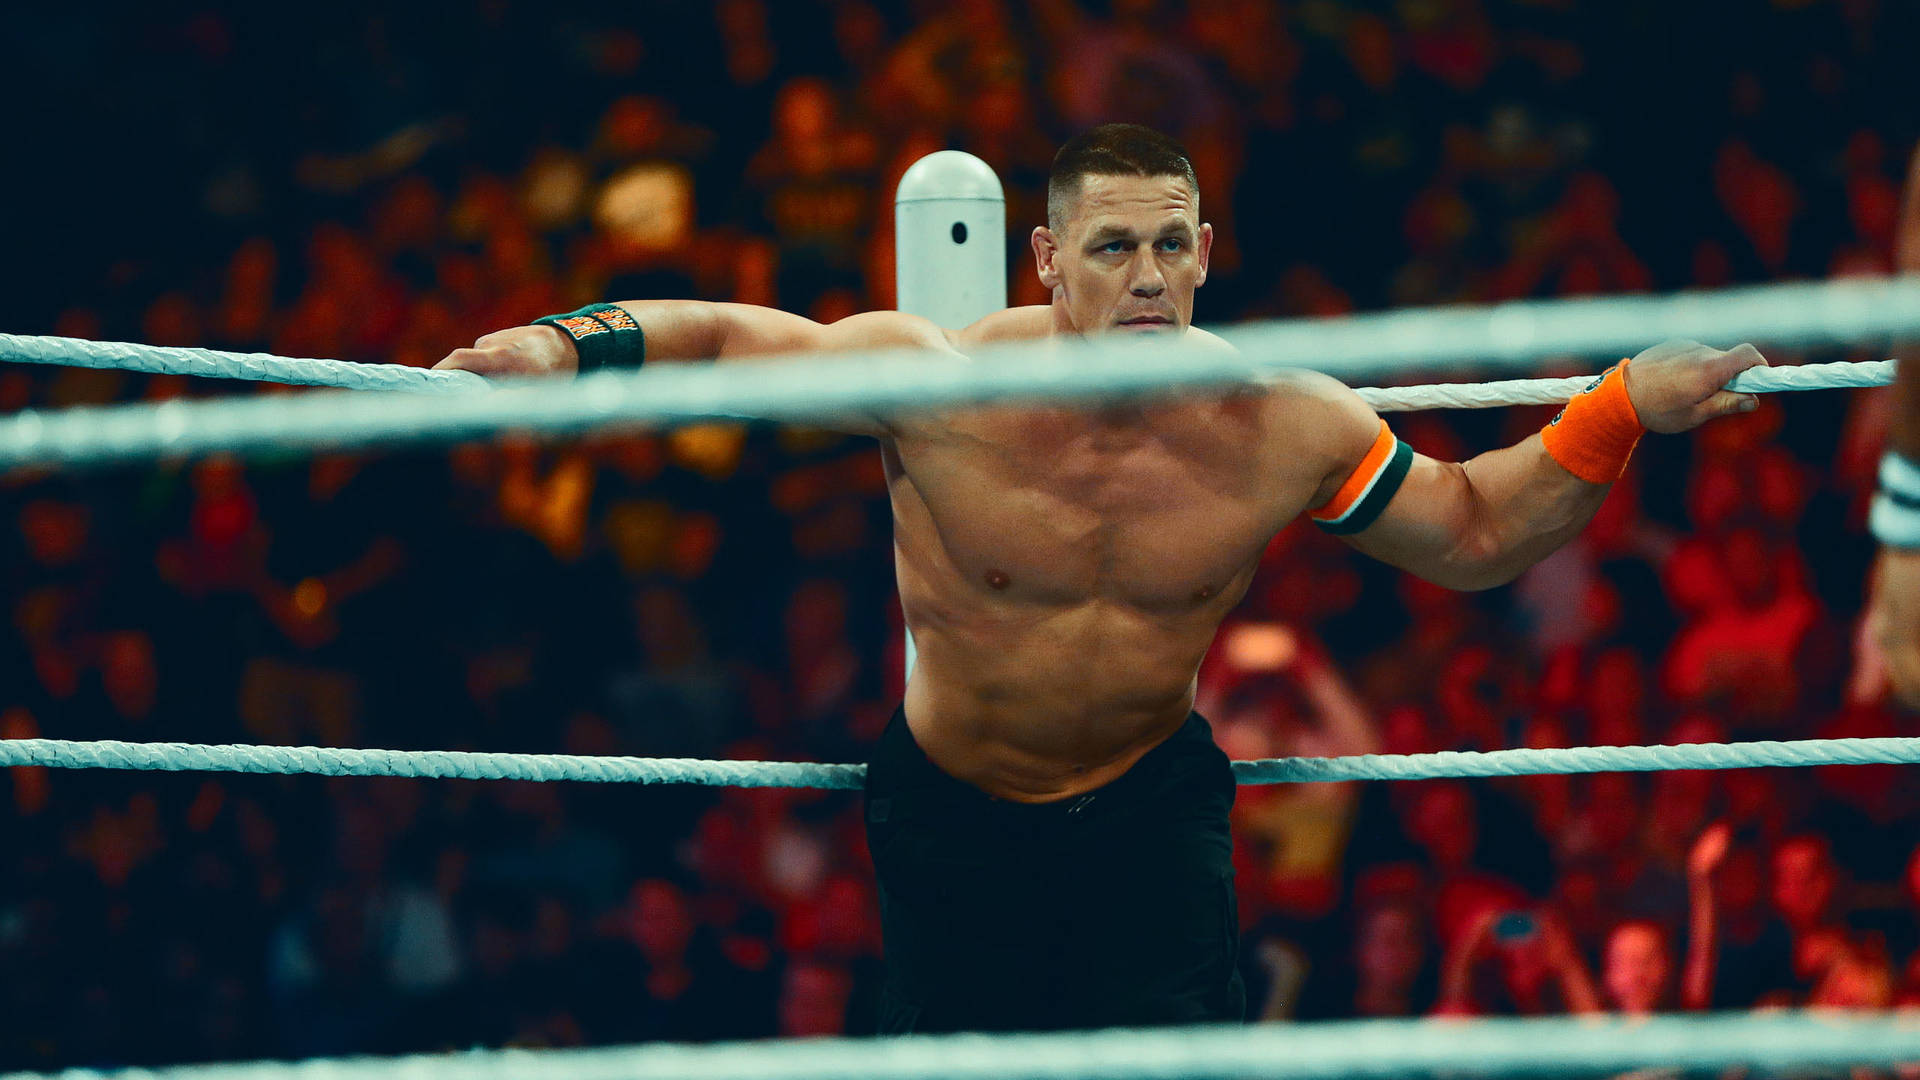 John Cena In The Ring Background